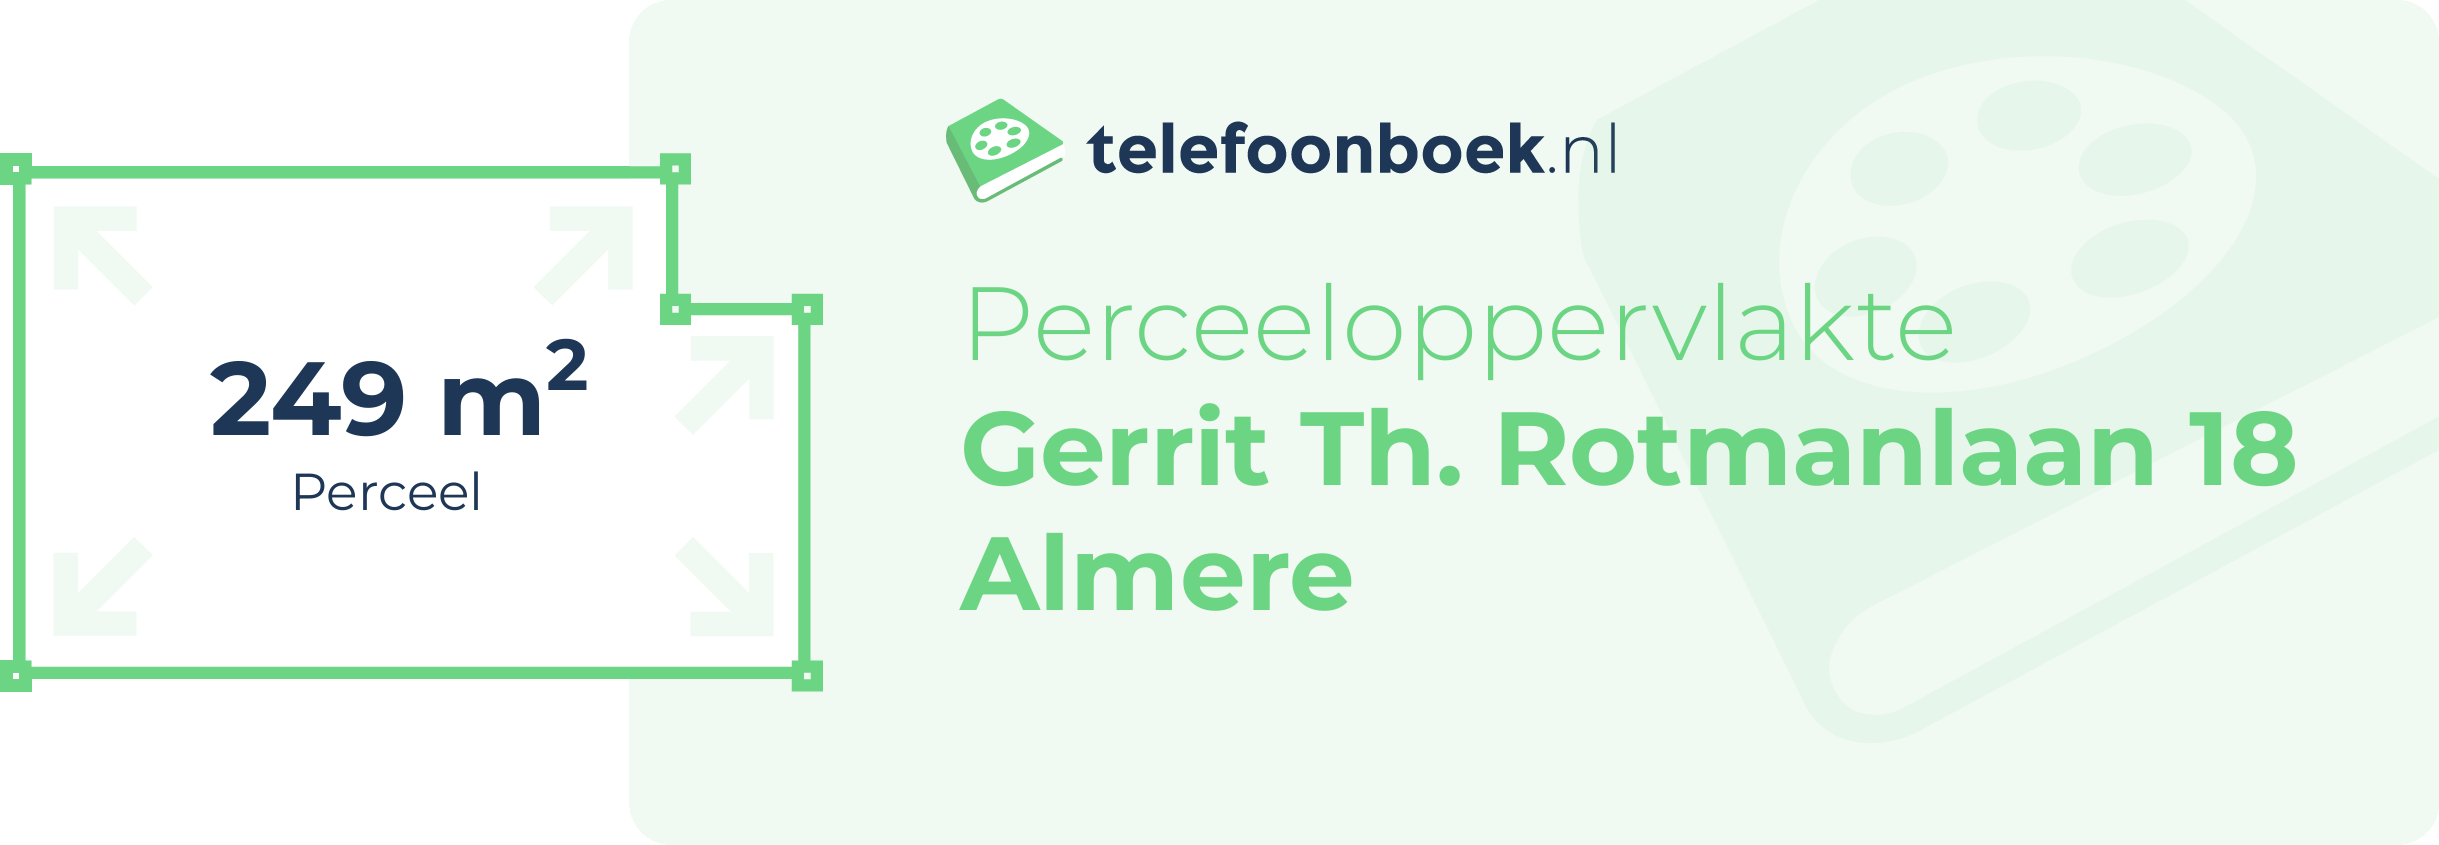 Perceeloppervlakte Gerrit Th. Rotmanlaan 18 Almere